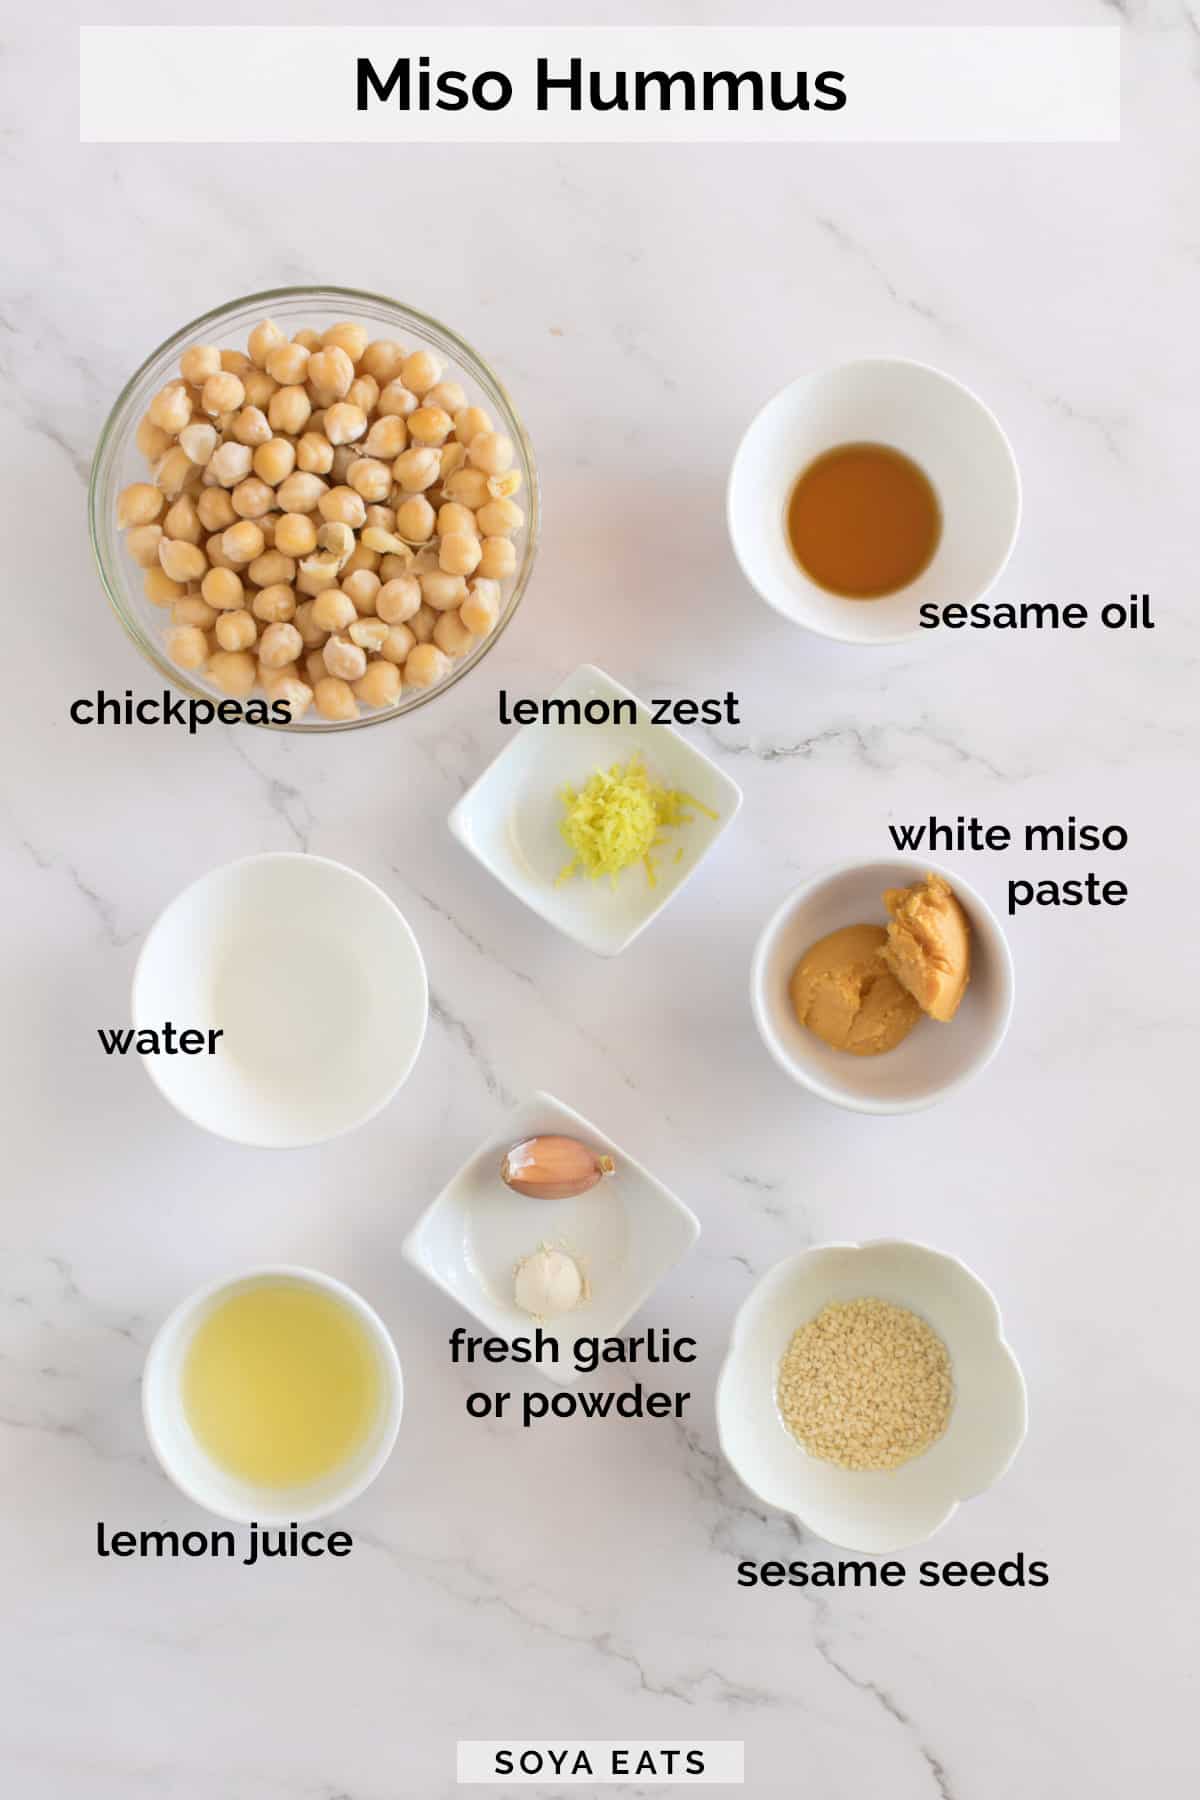 Image of ingredients needed to make miso hummus.